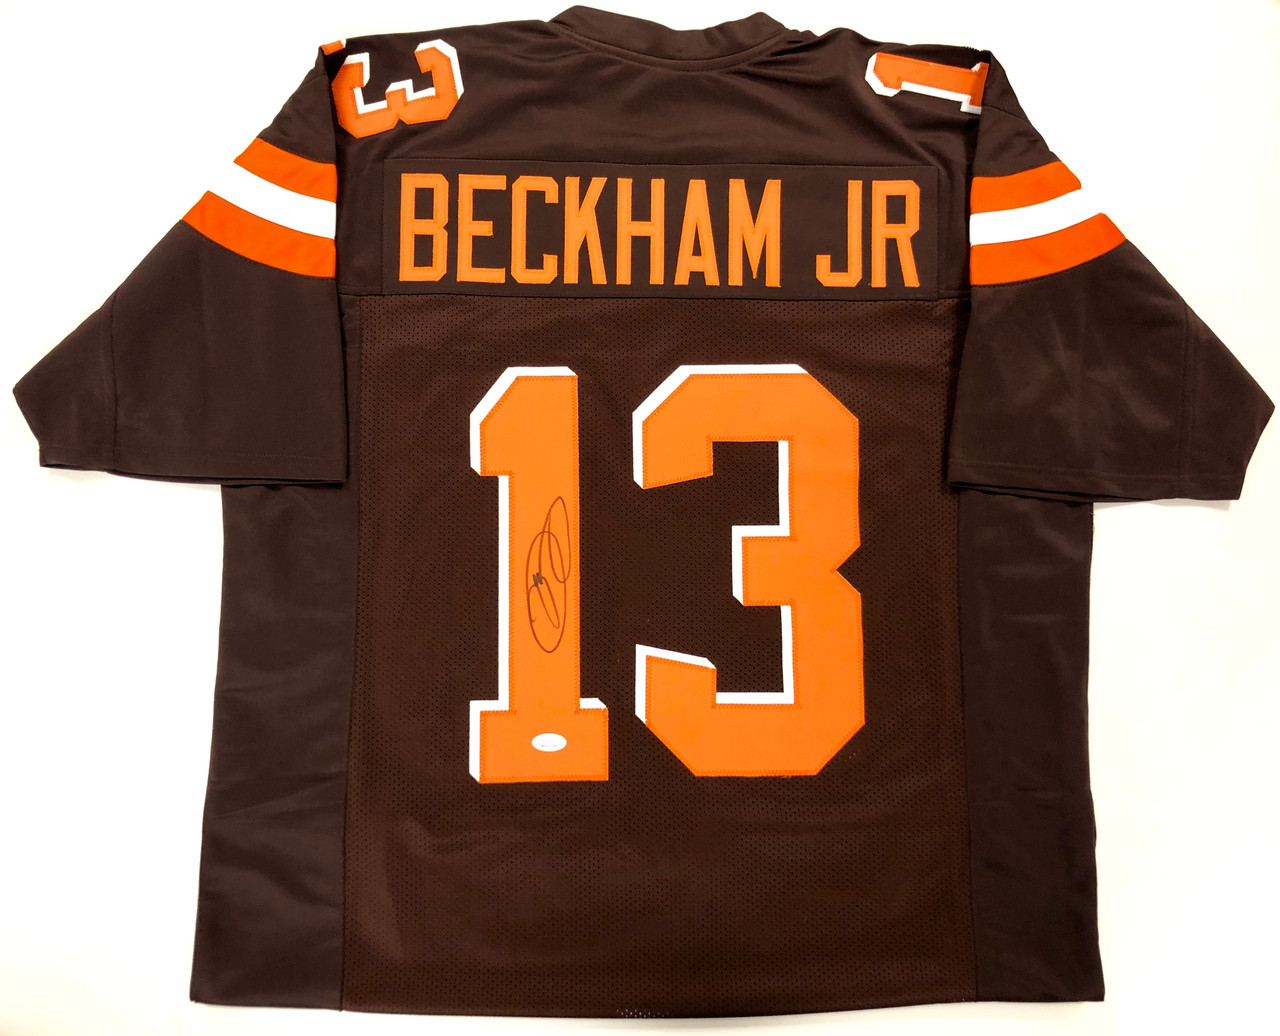 authentic beckham jr jersey | www 